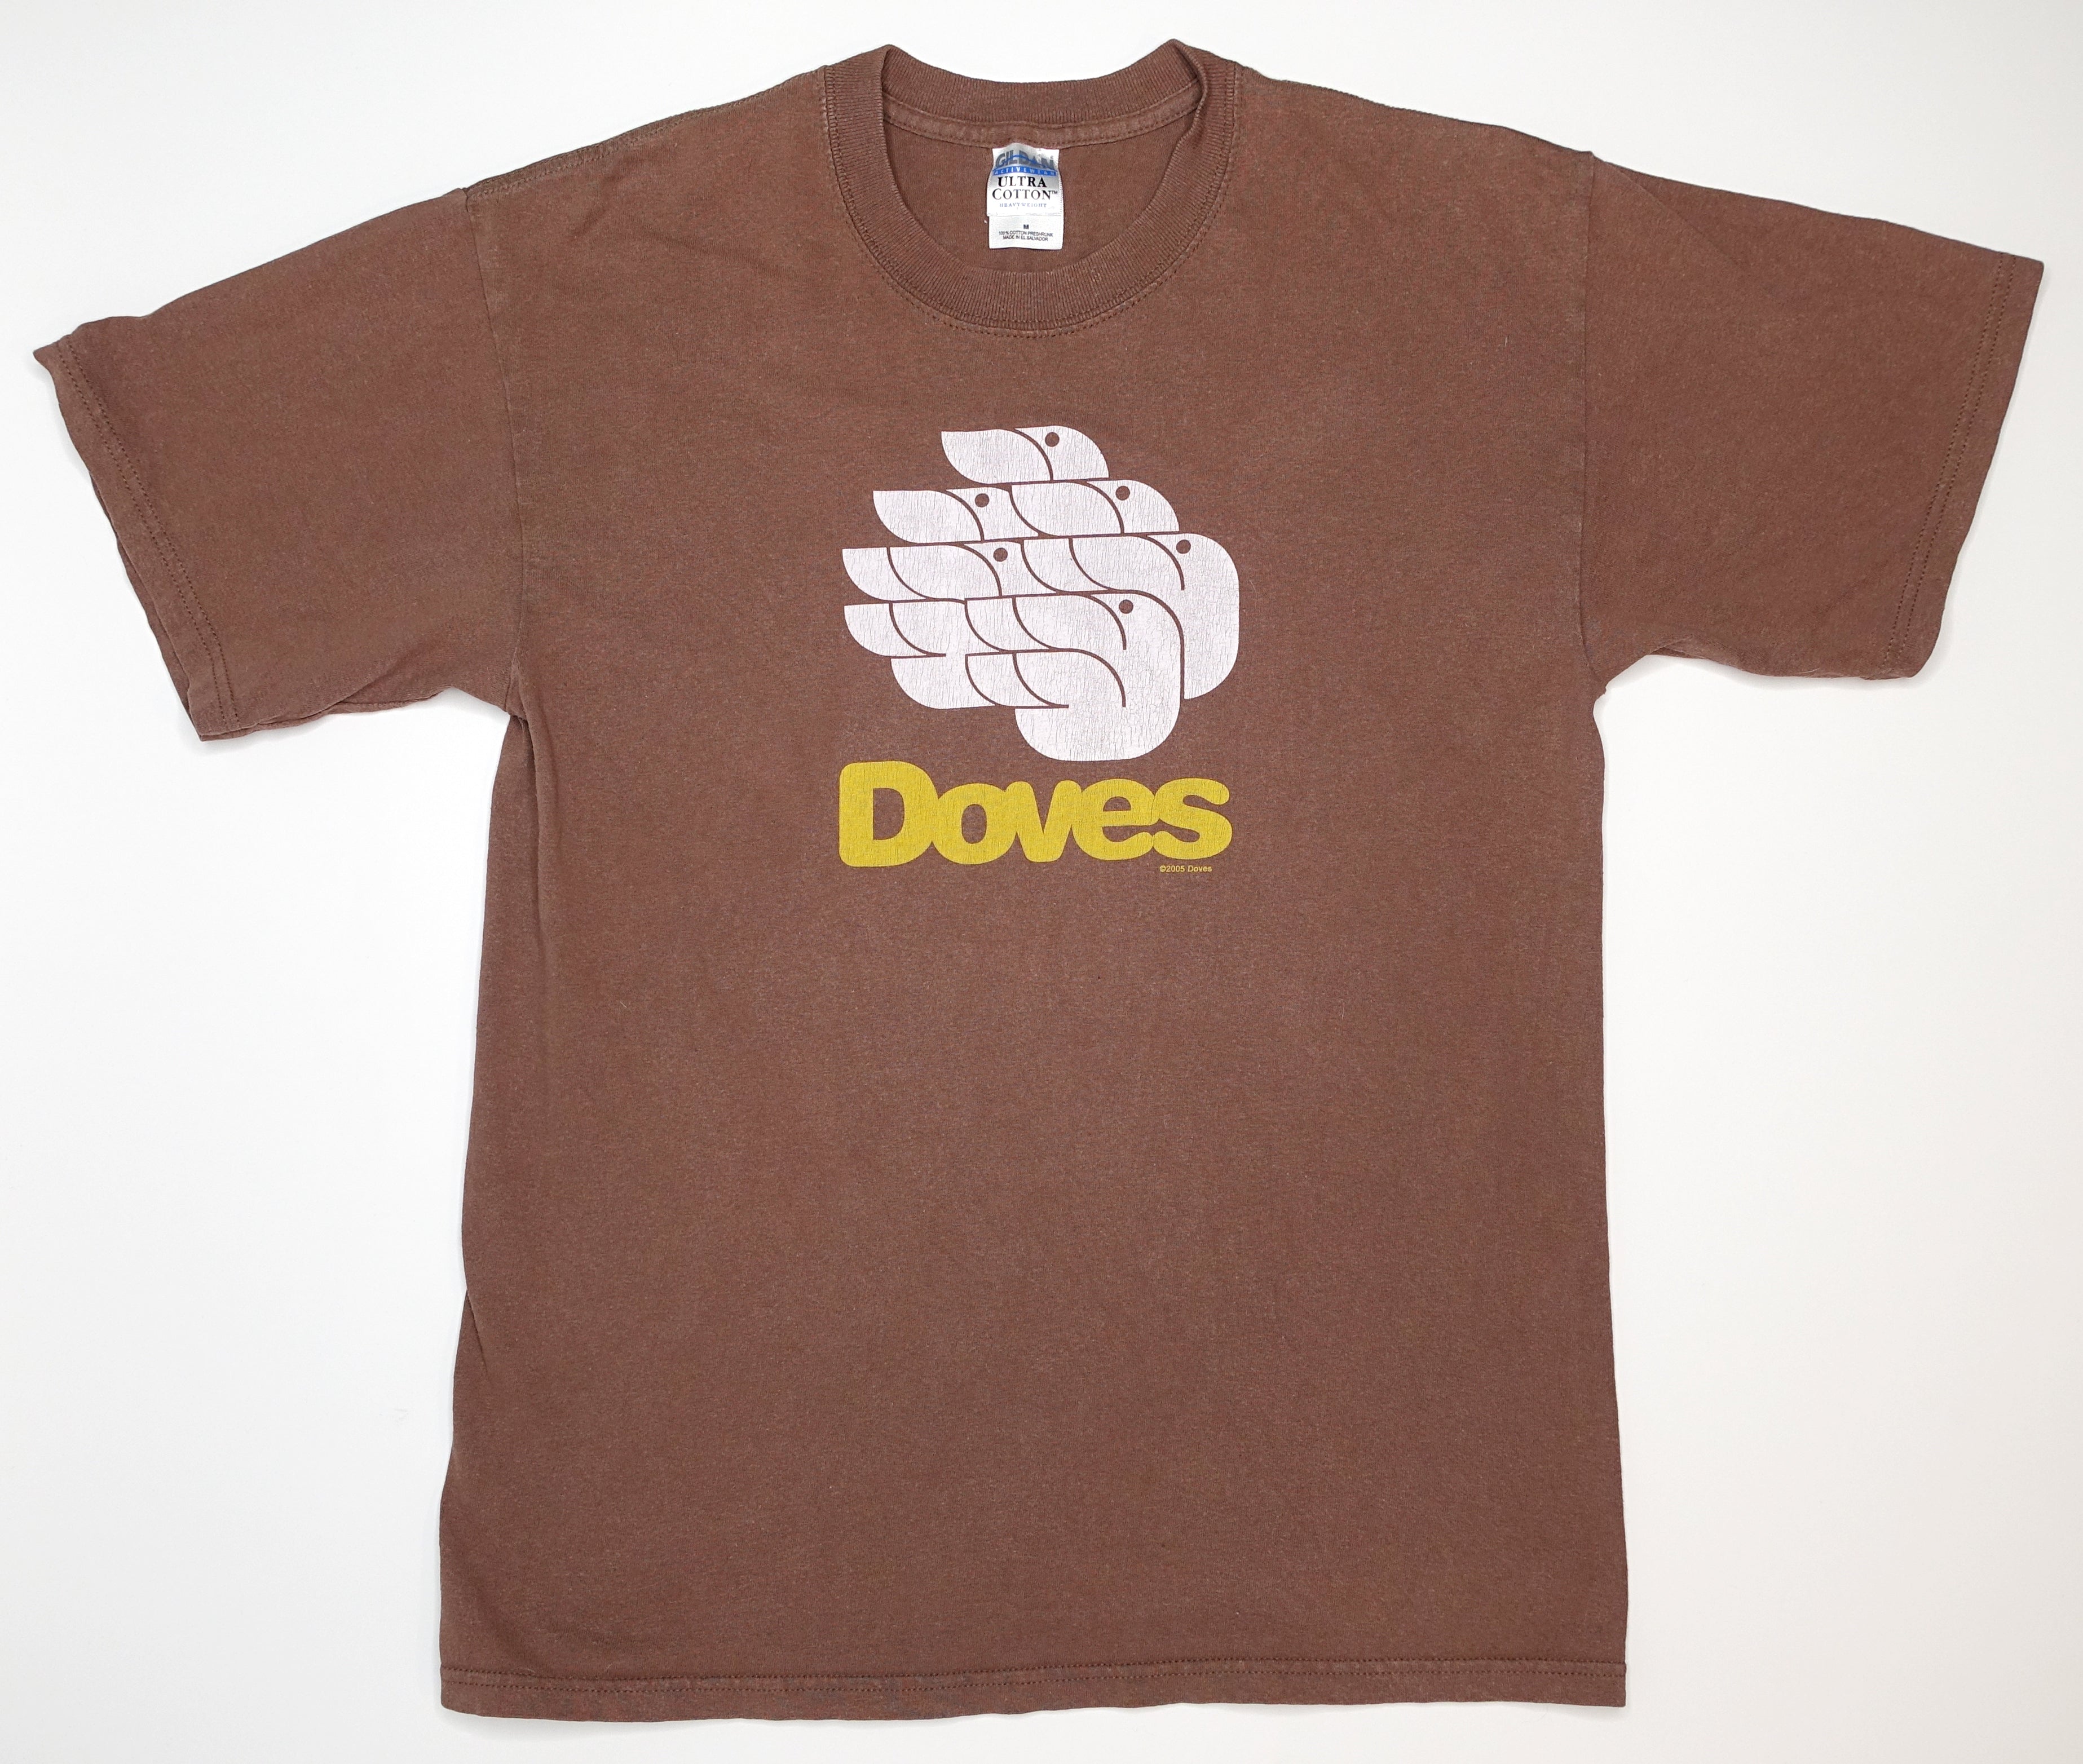 Doves – Some Cities 2005 Tour Shirt Size Medium